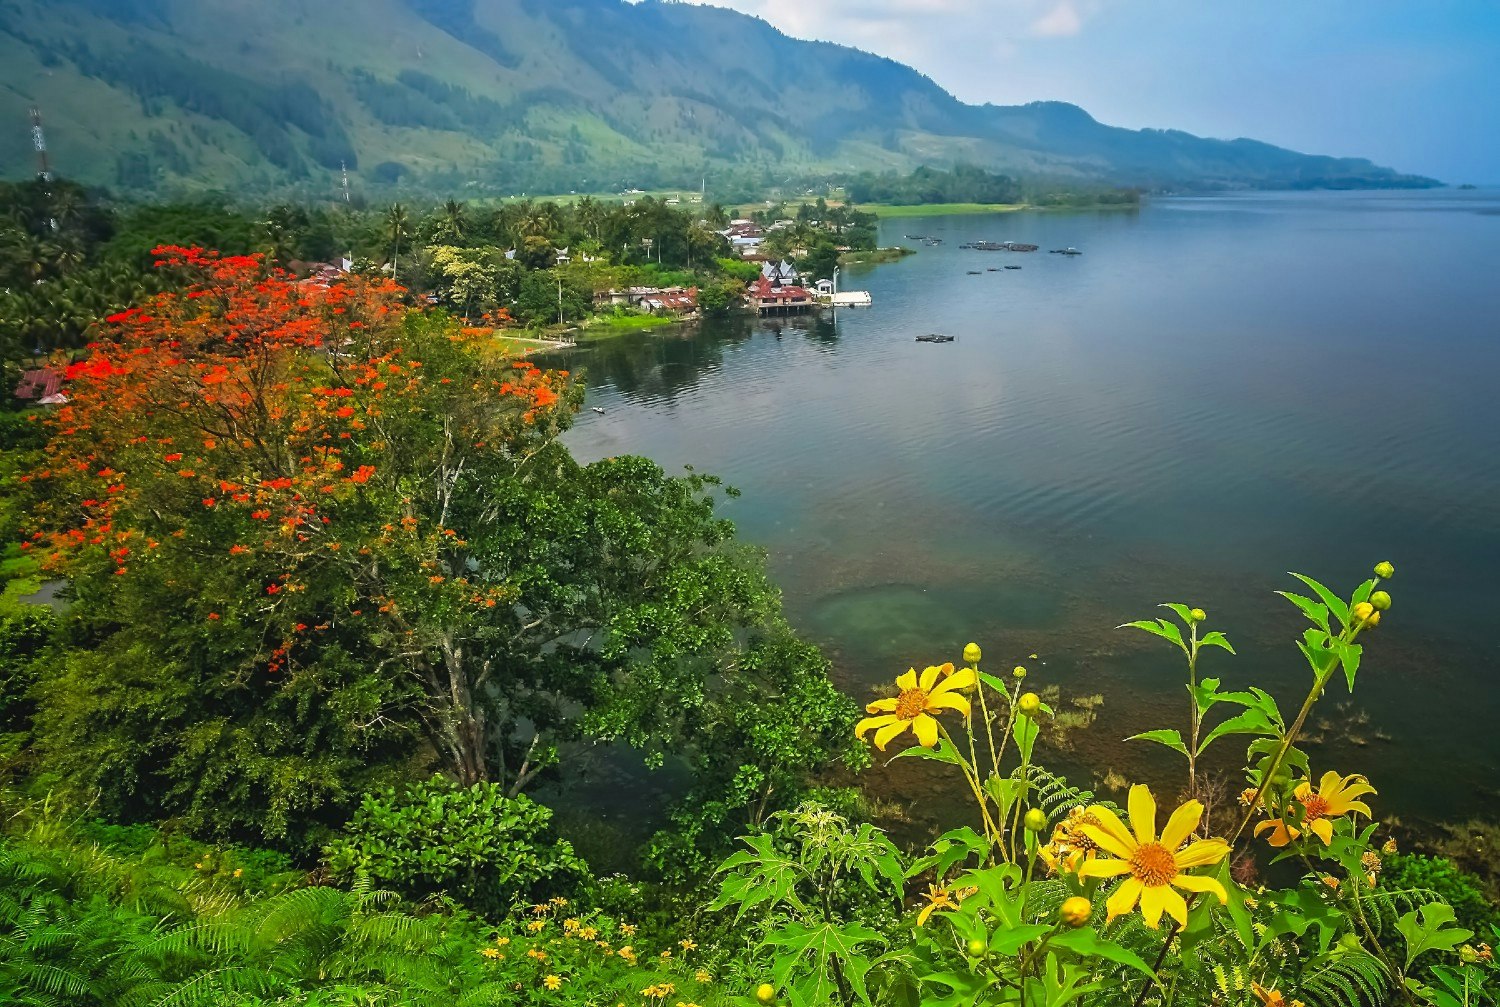 The shore of Lake Toba on the Sumatra Island, Indonesia